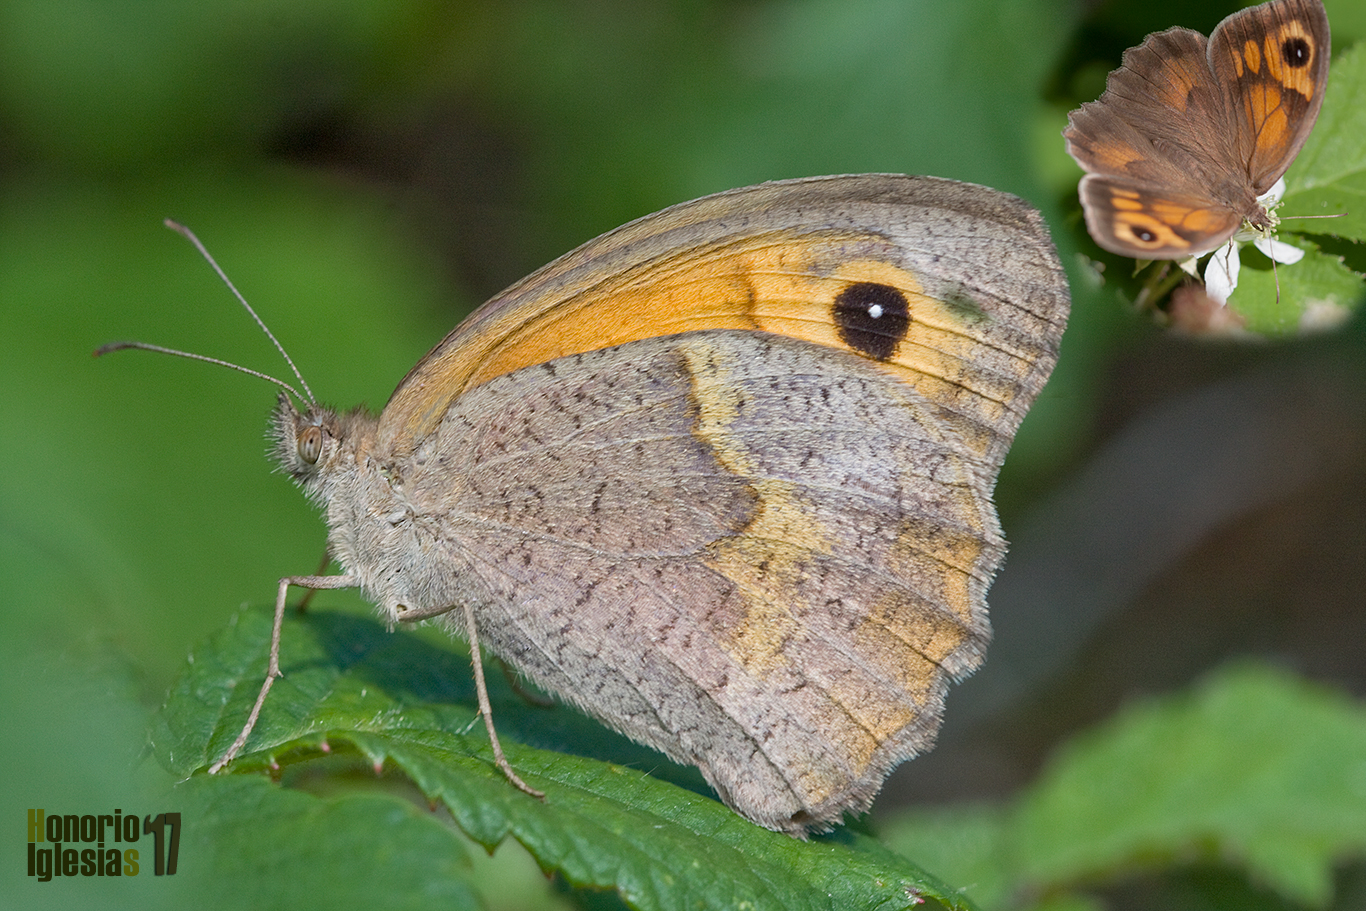 Hembra de mariposa loba (Maniola jurtina) mostrando su reverso alar. Arriba a la derecha detalle del anverso.